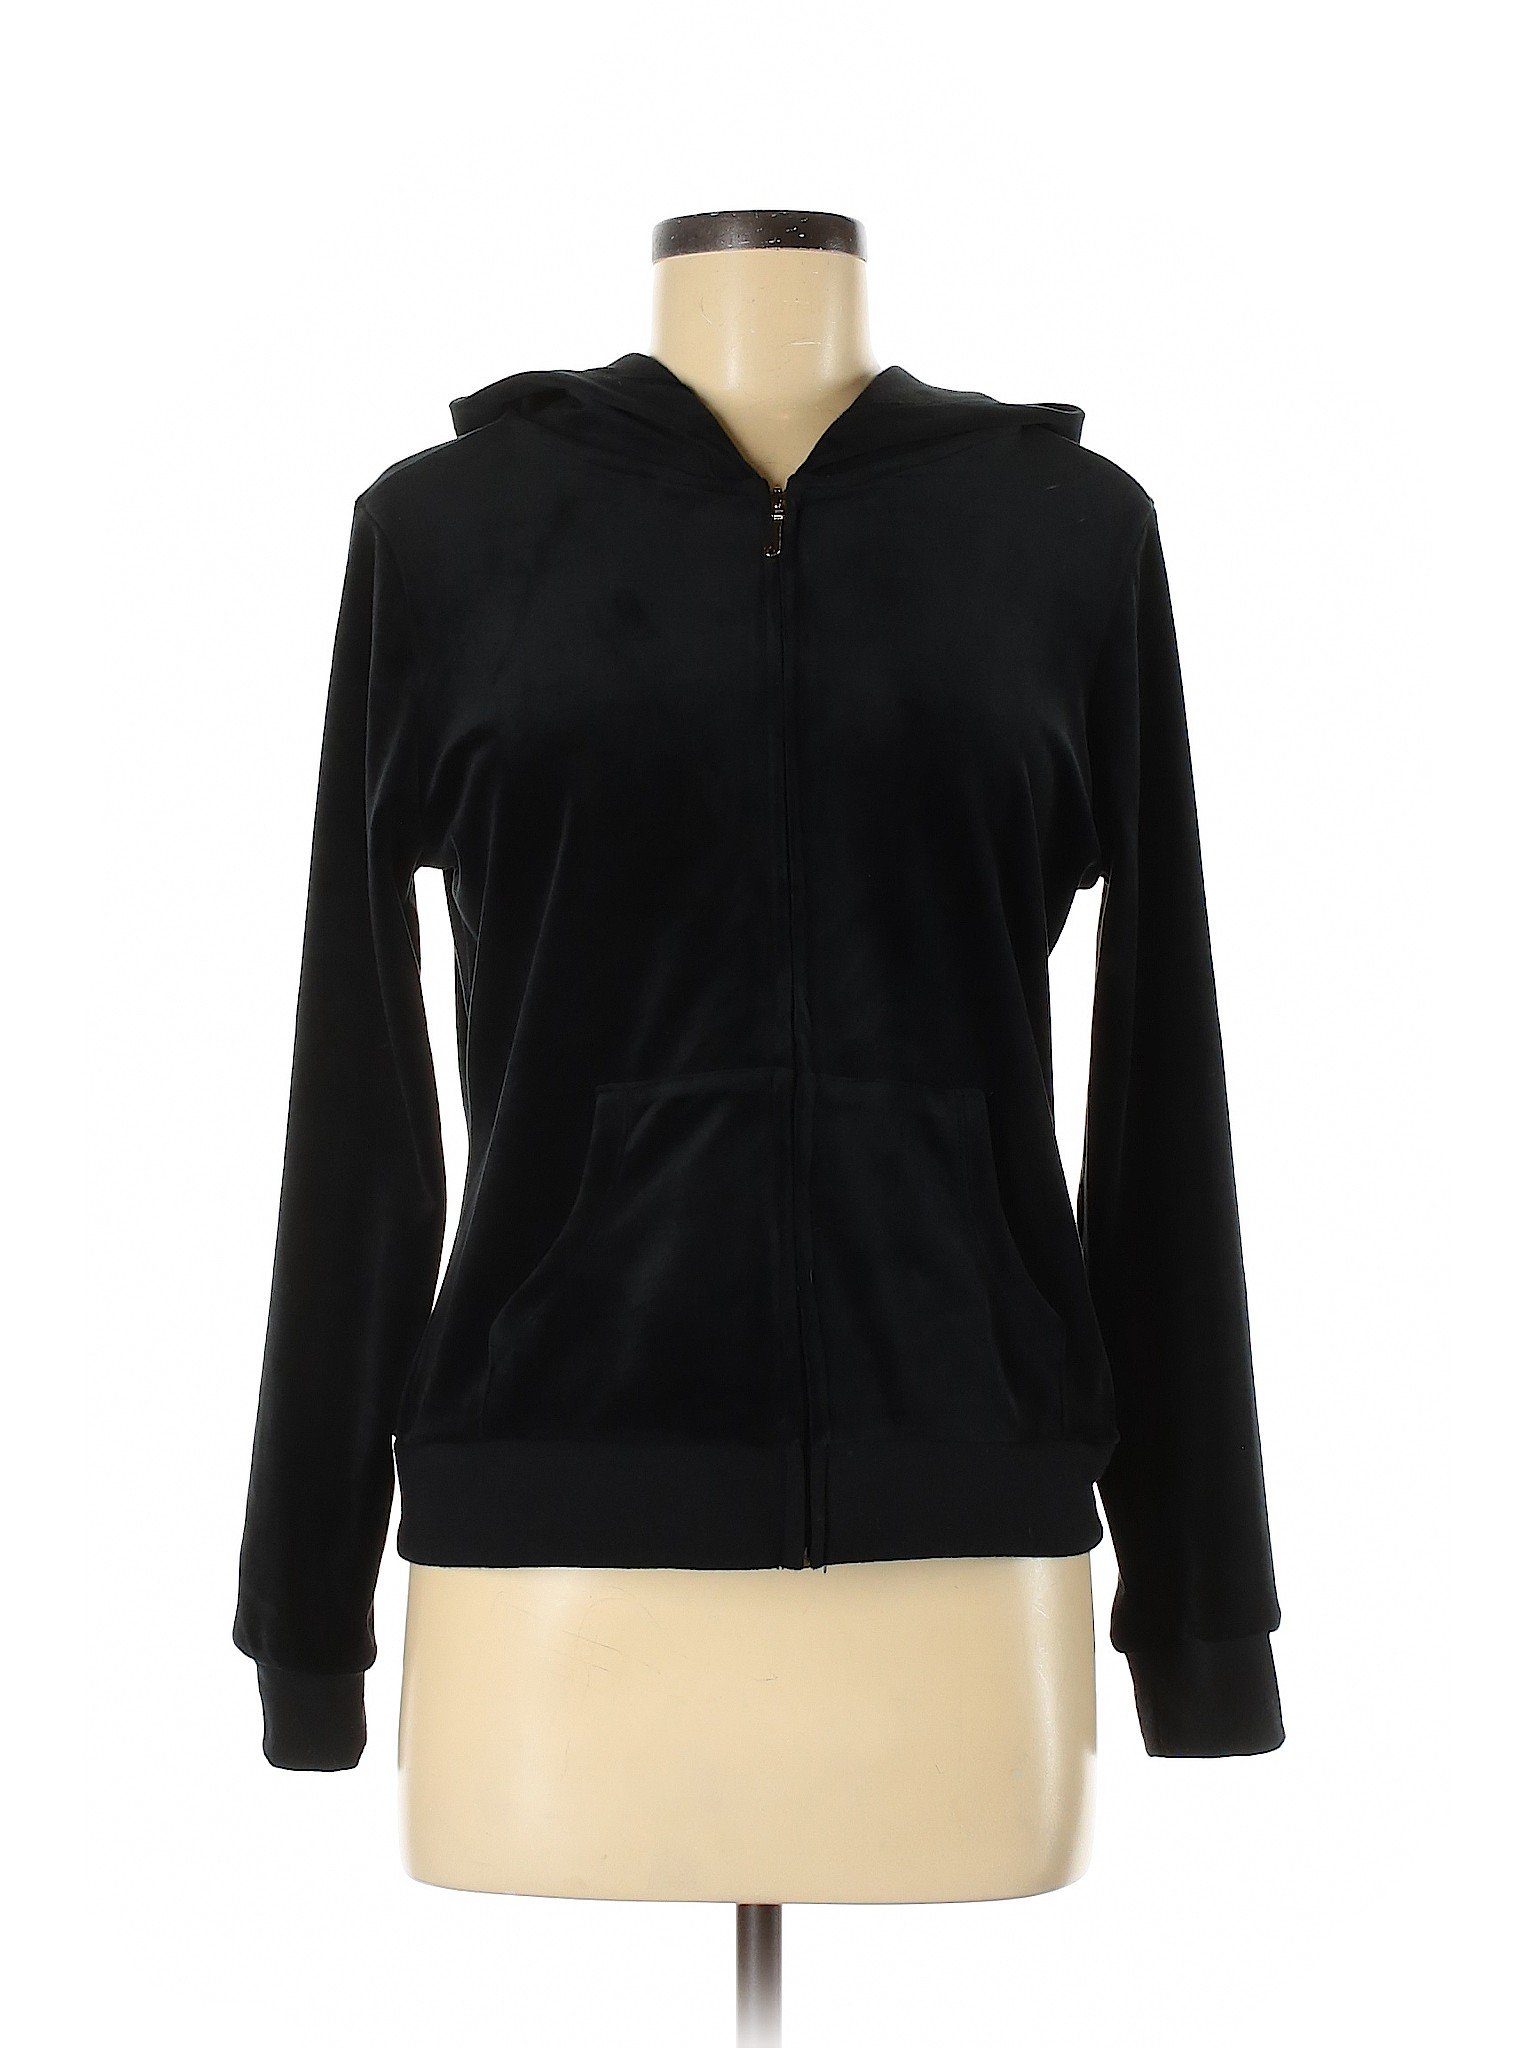 Juicy Couture Solid Black Zip Up Hoodie Size M - 84% off | thredUP